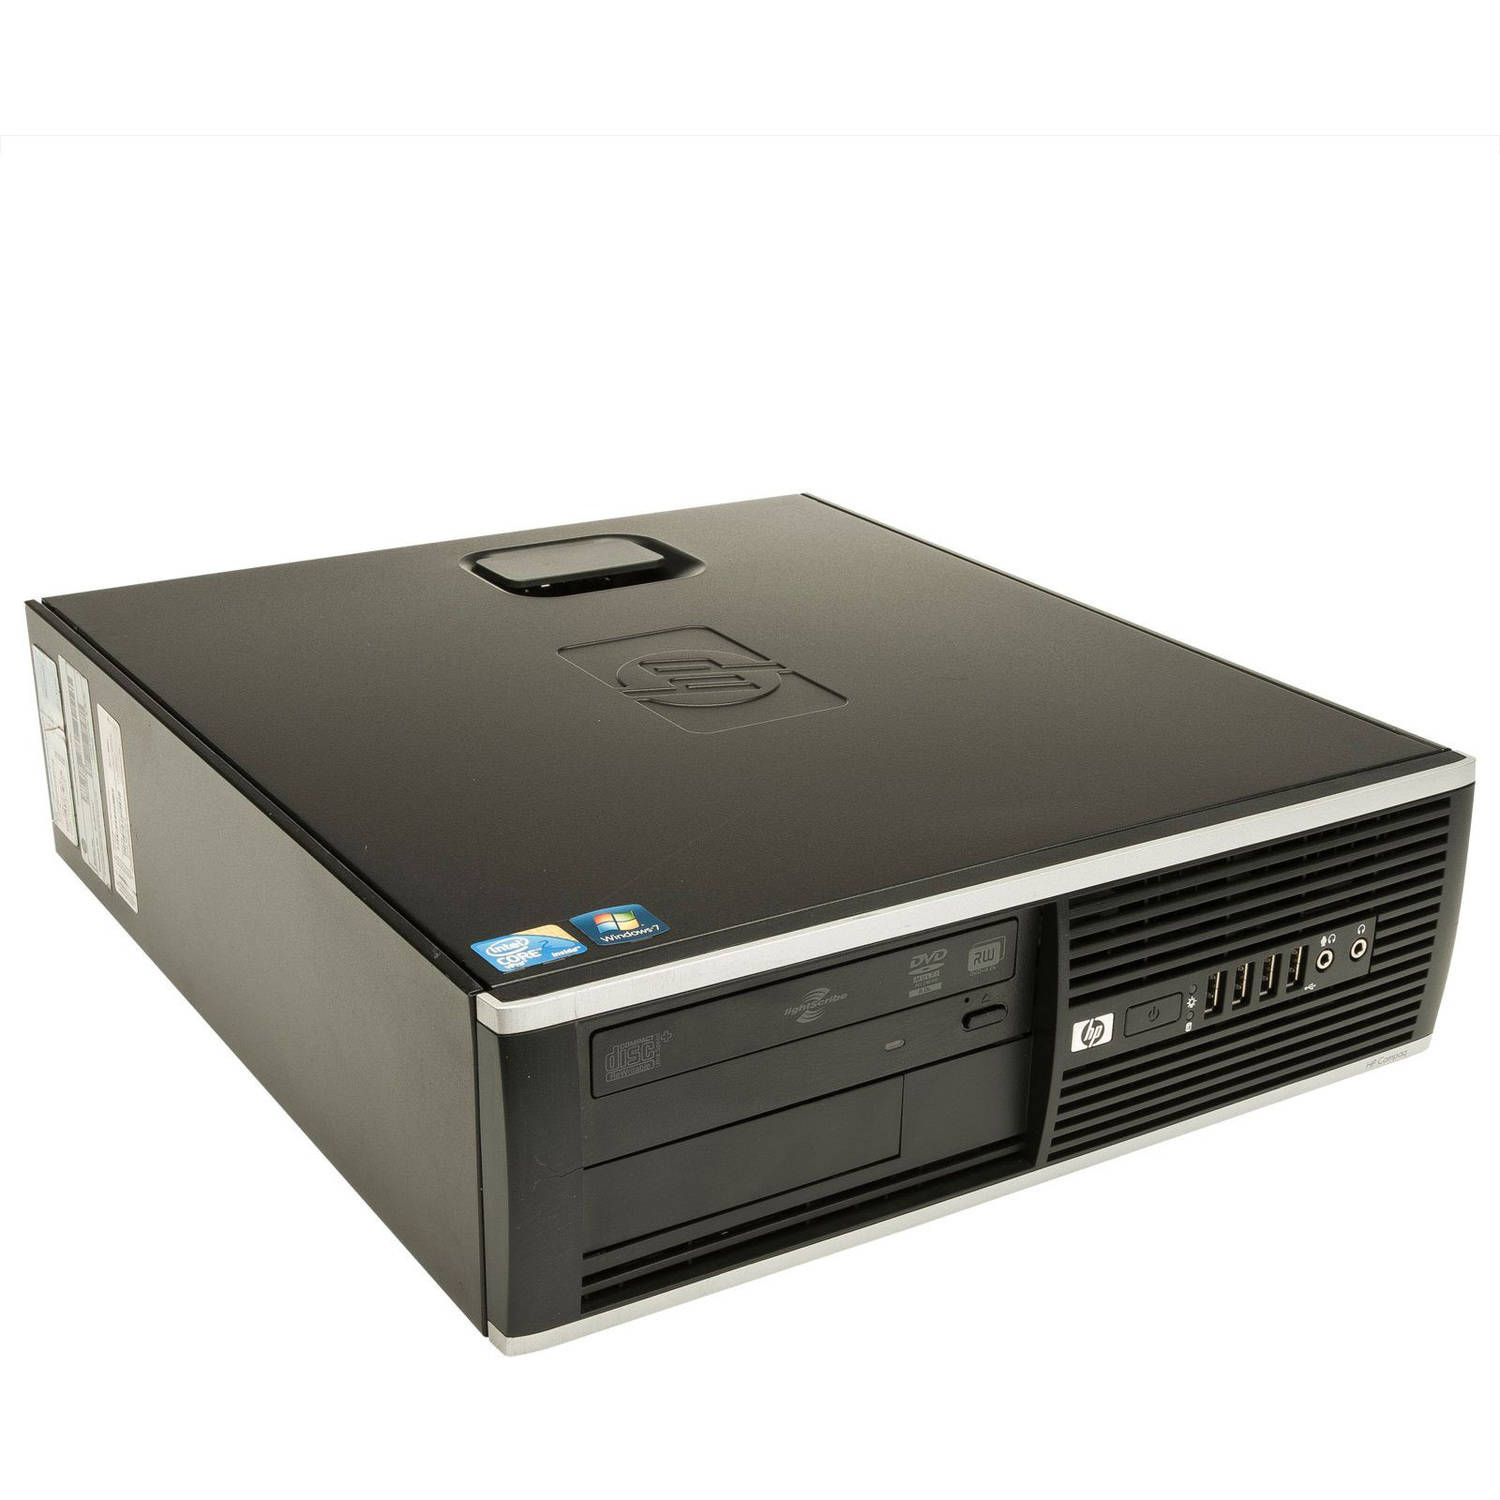 Restored HP ProDesk 6200 Desktop Tower Computer, Intel Core i5, 4GB RAM, 250GB HD, DVDROM, Windows 10 Professional 64Bit, Black (Refurbished) - image 3 of 3